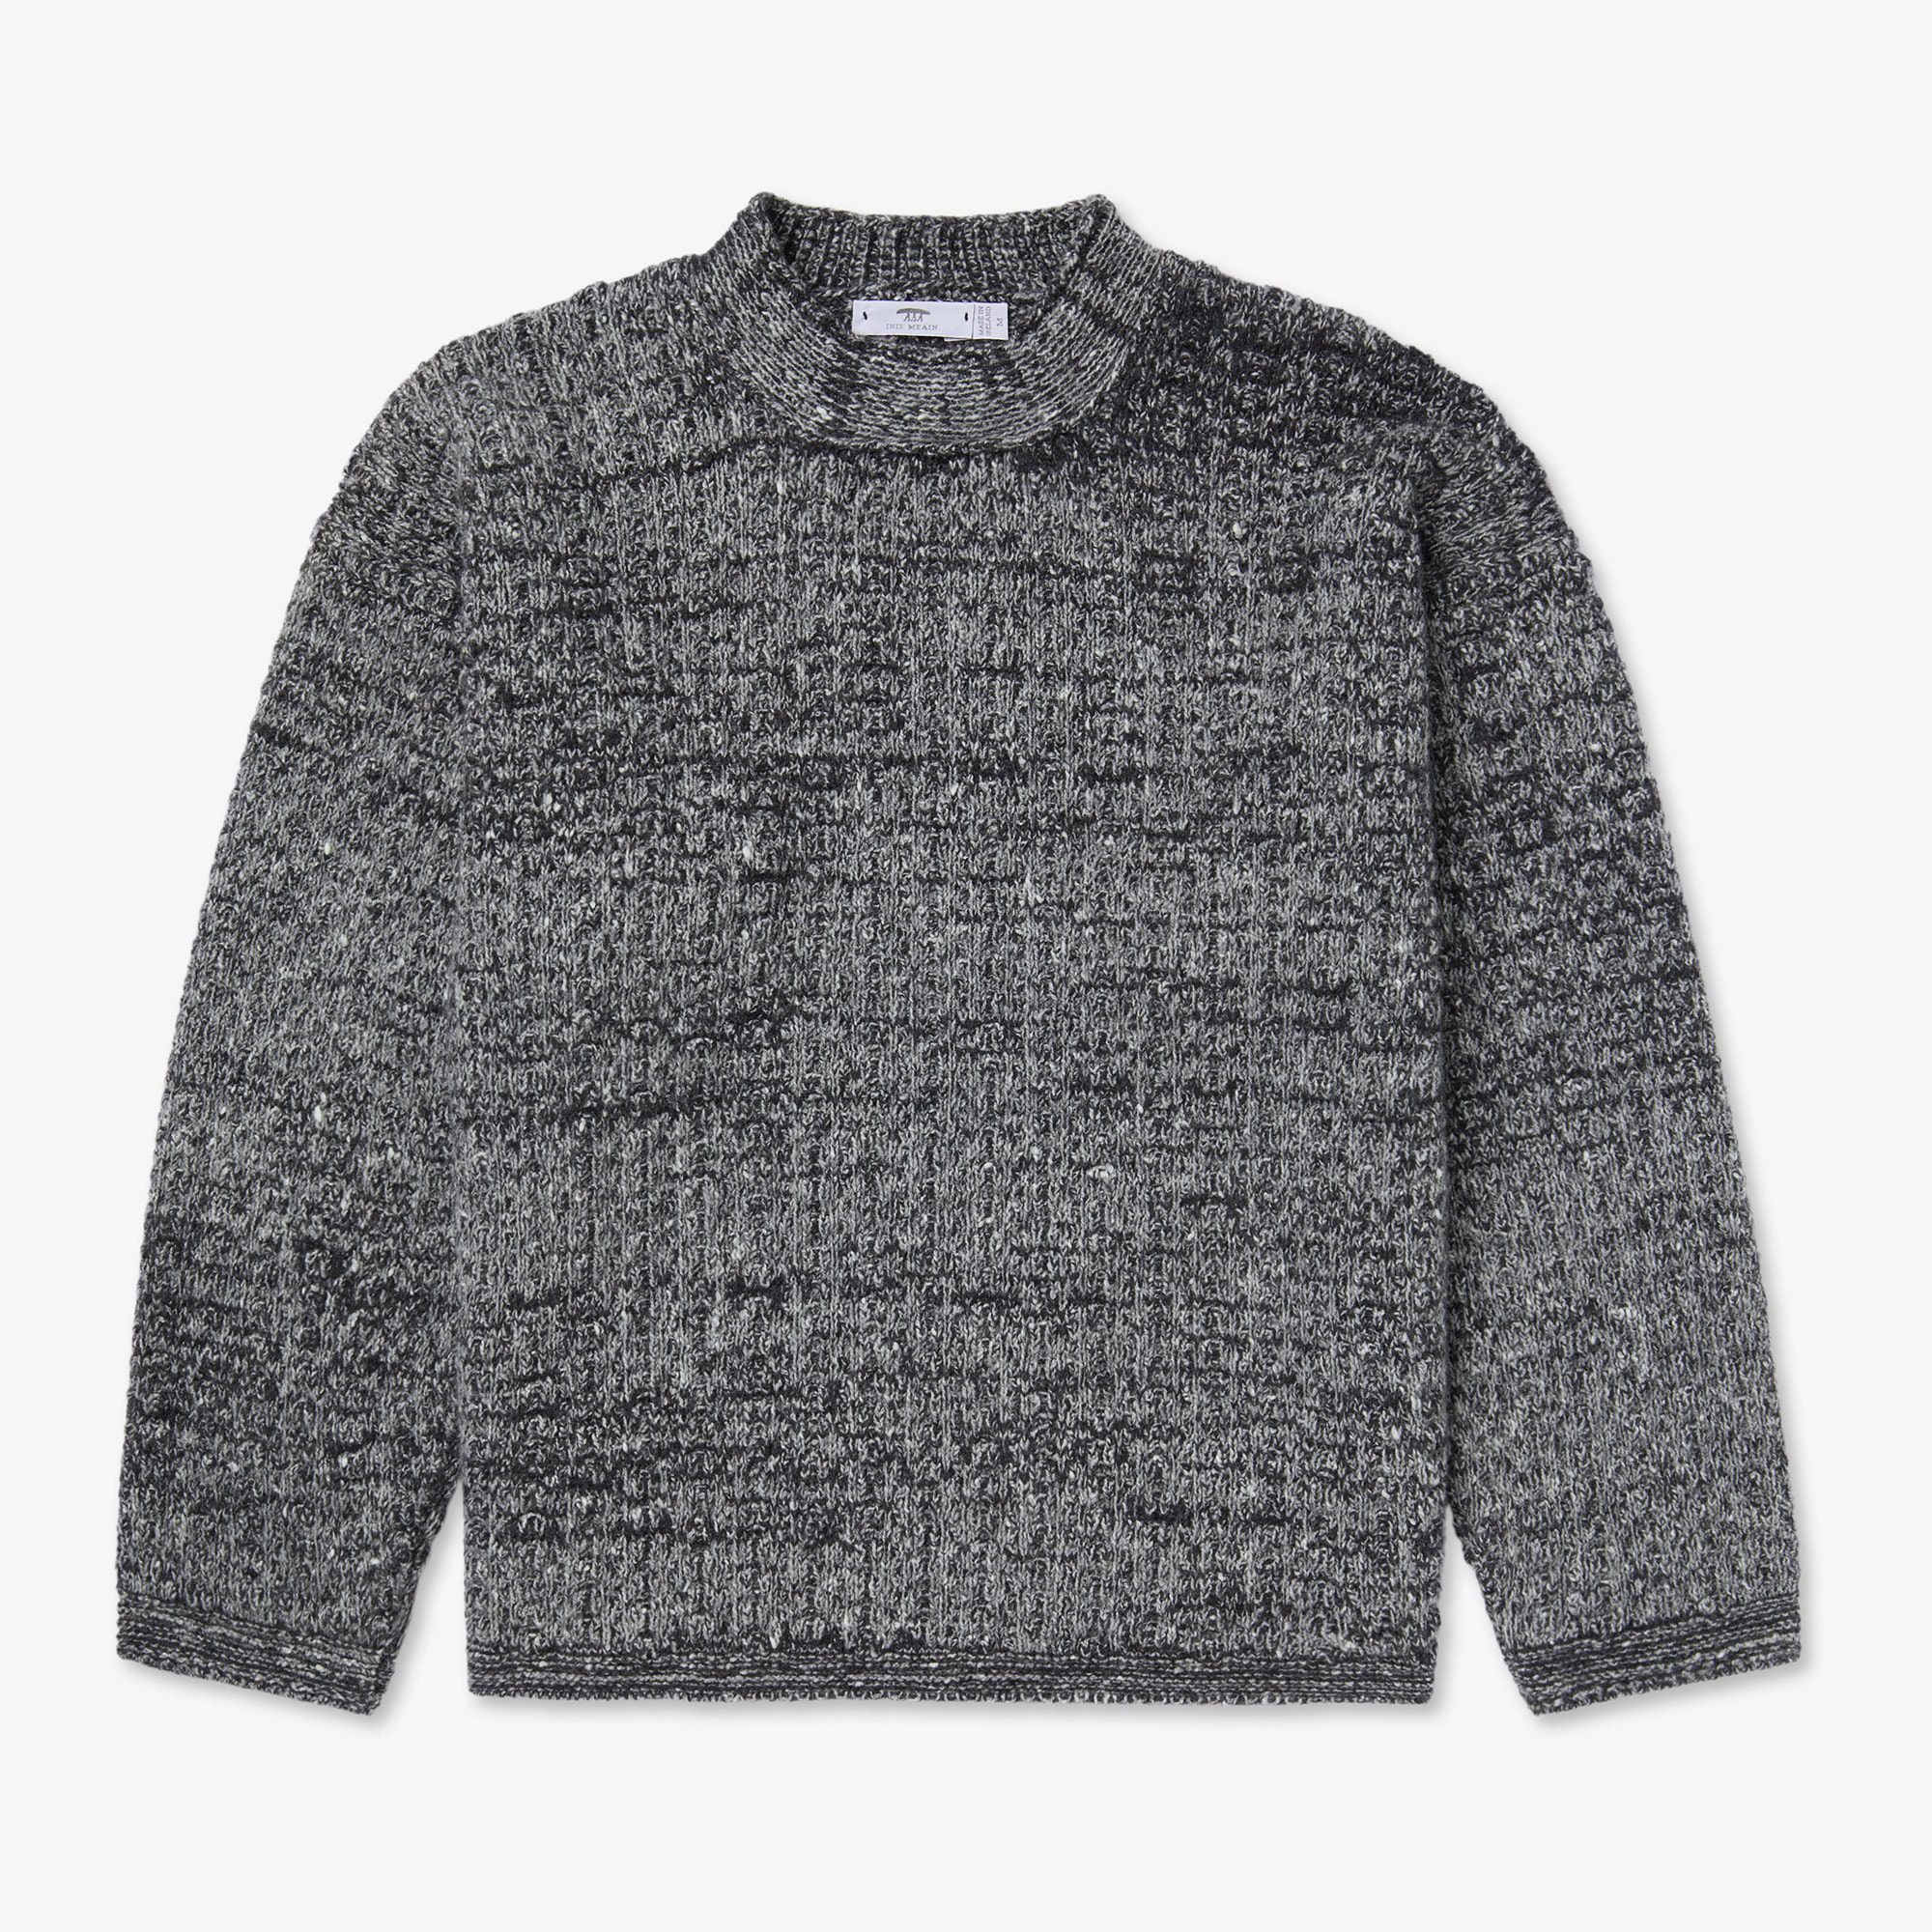 Oversized Beairtíní Sweater in Grey Mix — Inis Meáin Knitwear